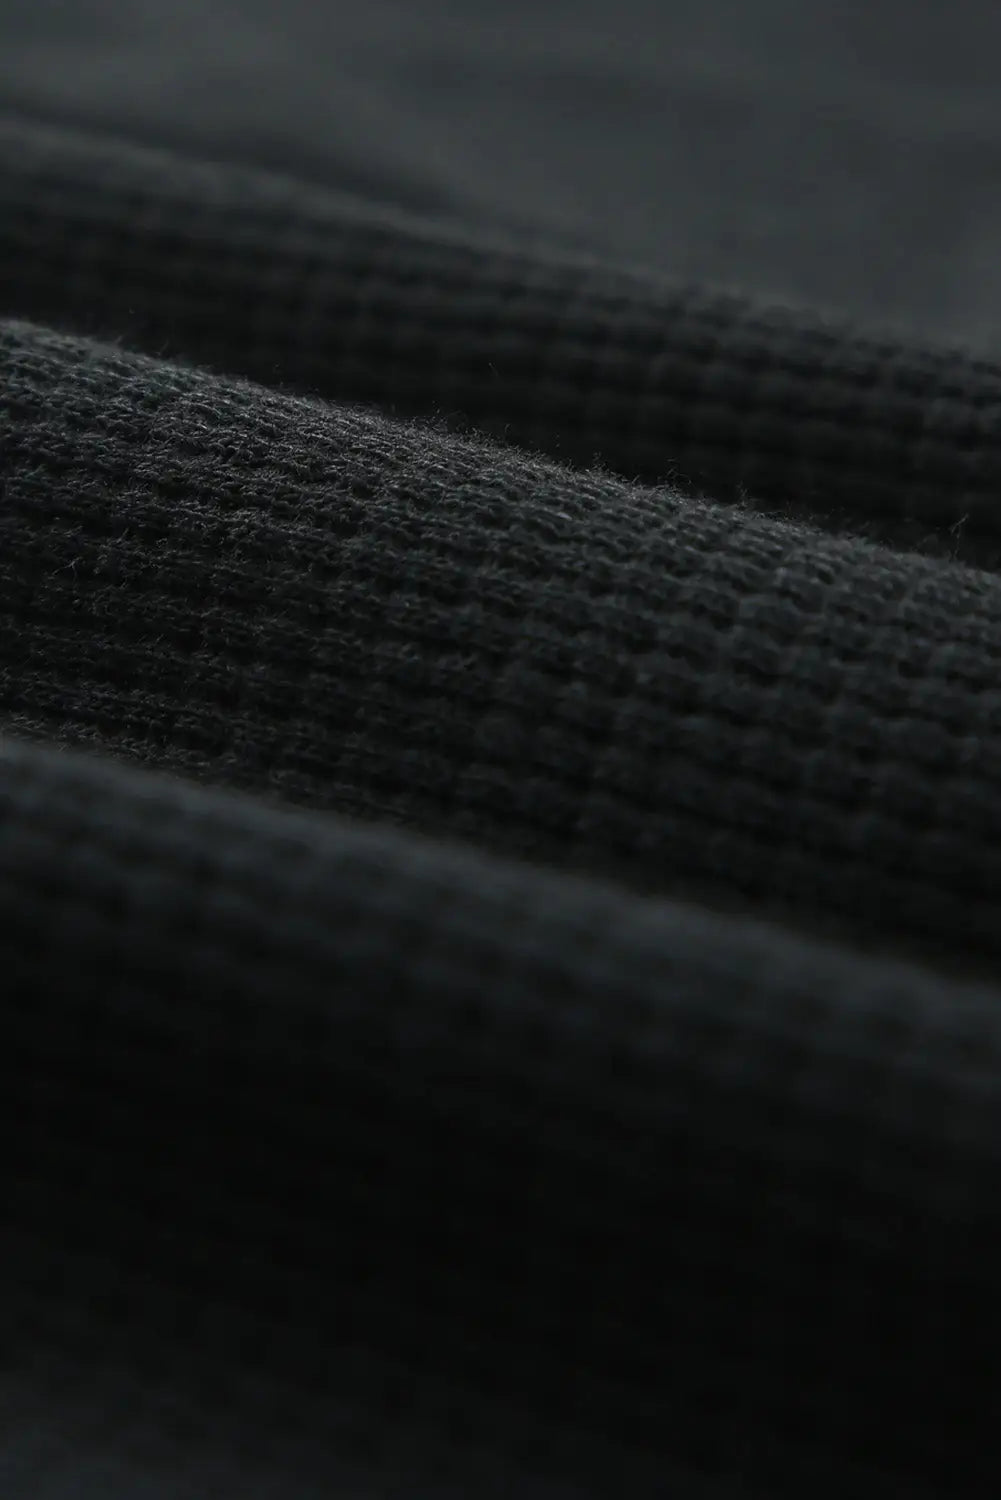 Black ribbed zipper sweatshirt and high waist shorts set - loungewear